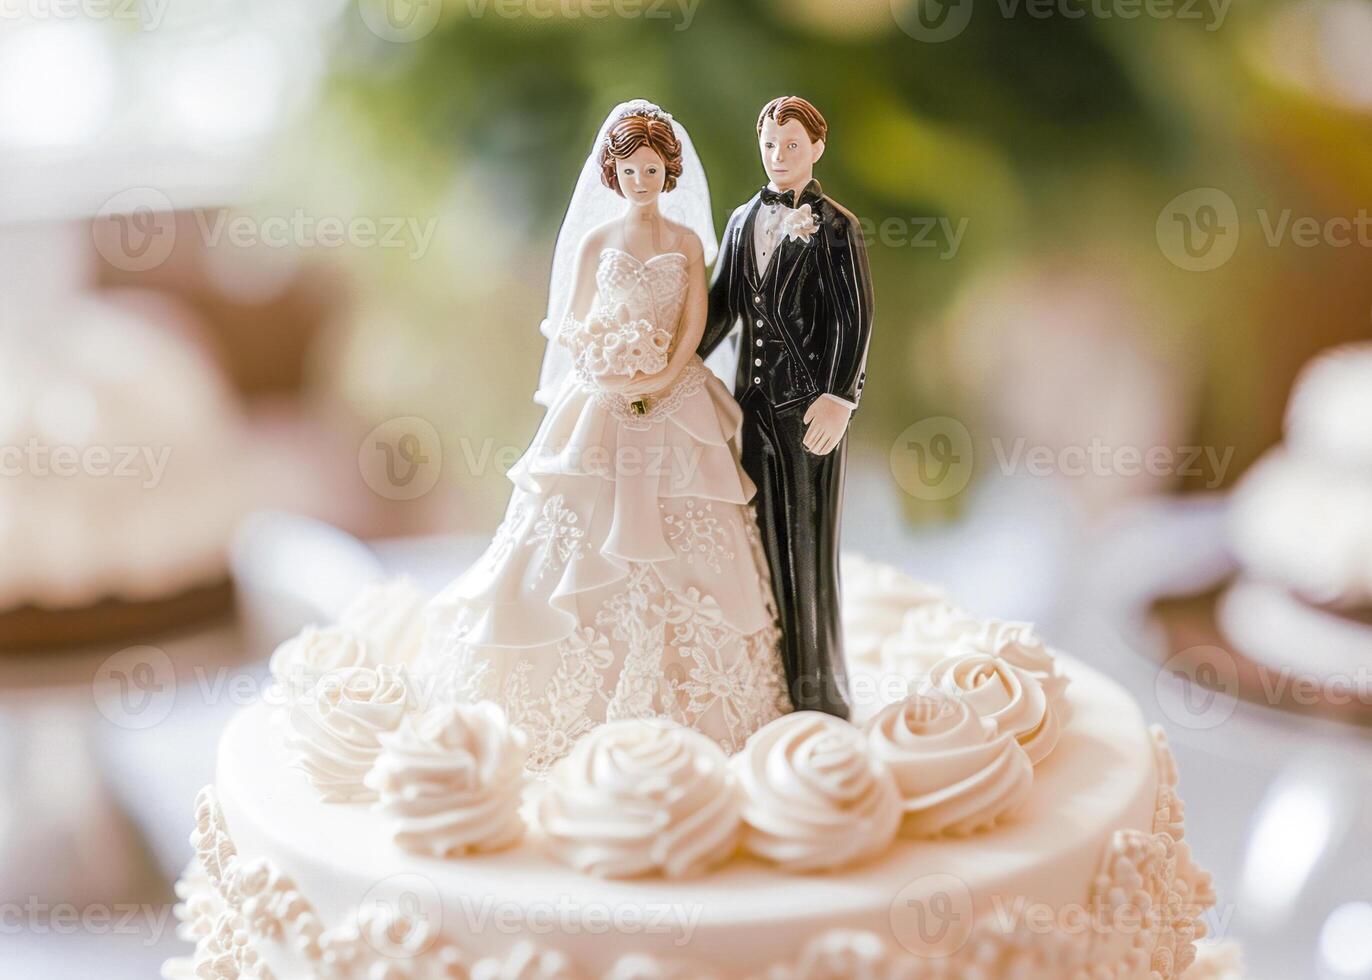 Bride and Groom Wedding Cake Topper Figurines photo